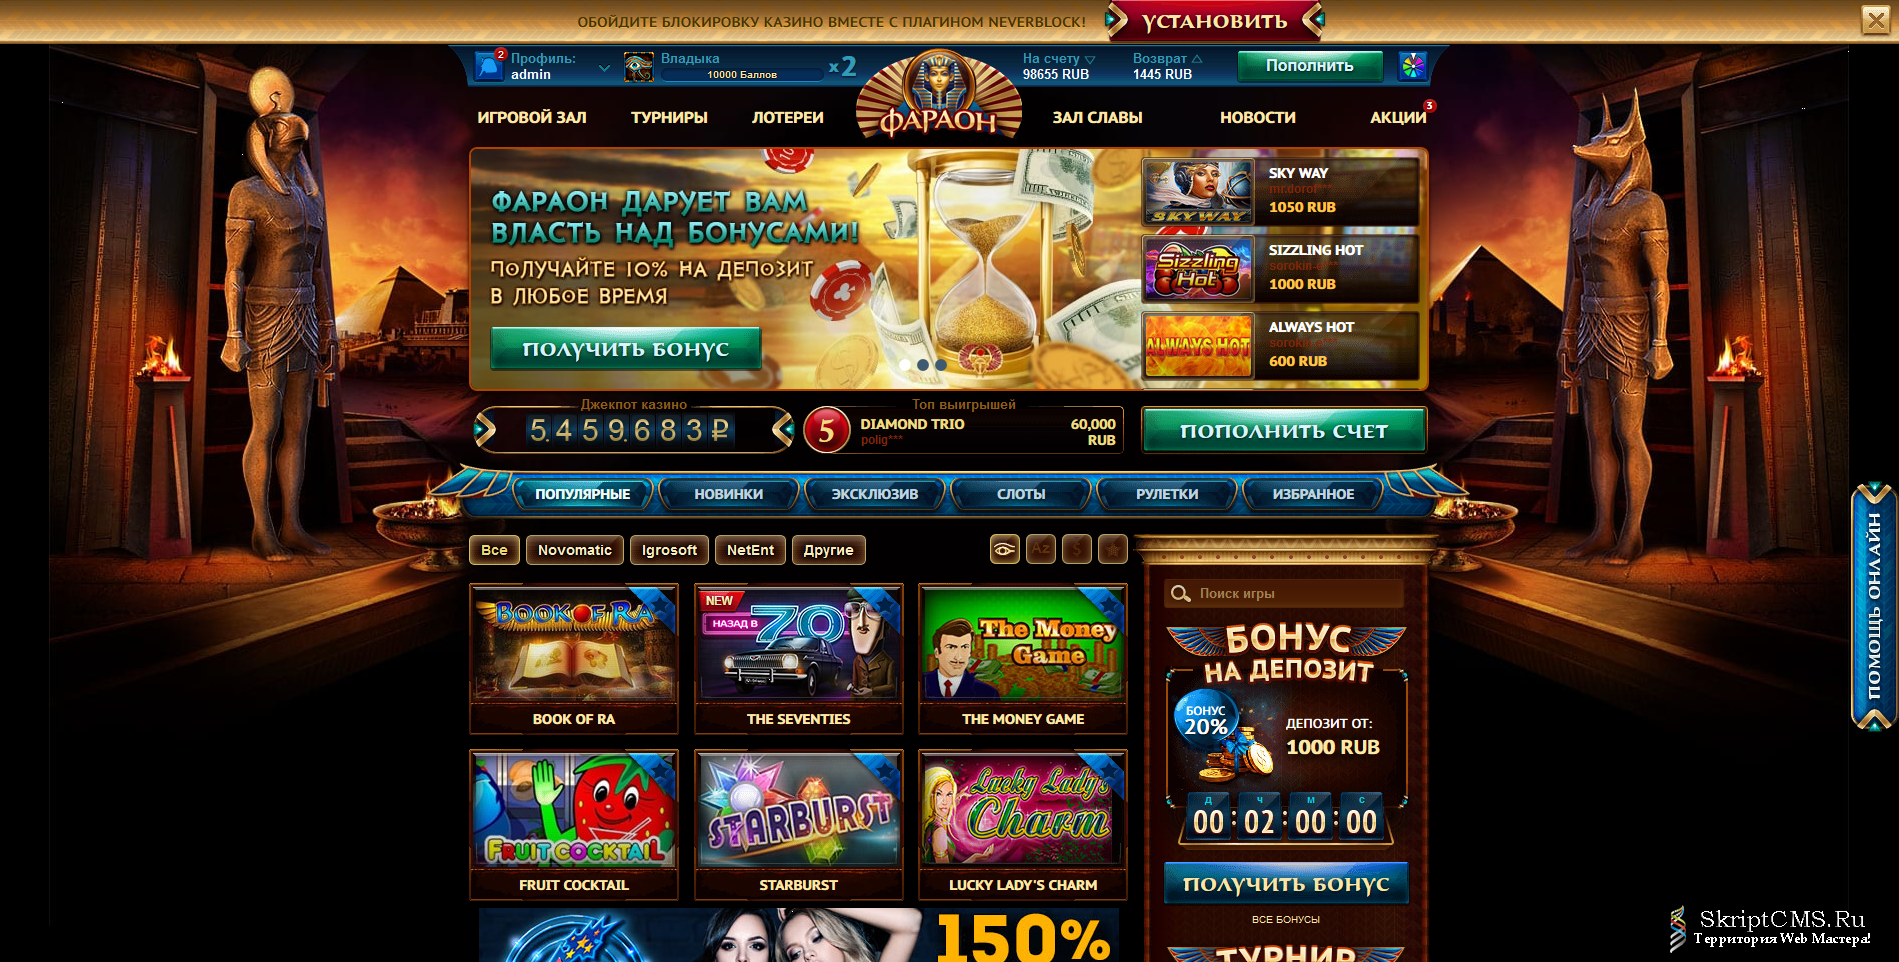 Скрипт для онлайн казино ставки на спорт онлайн с телефона в рублях отзывы